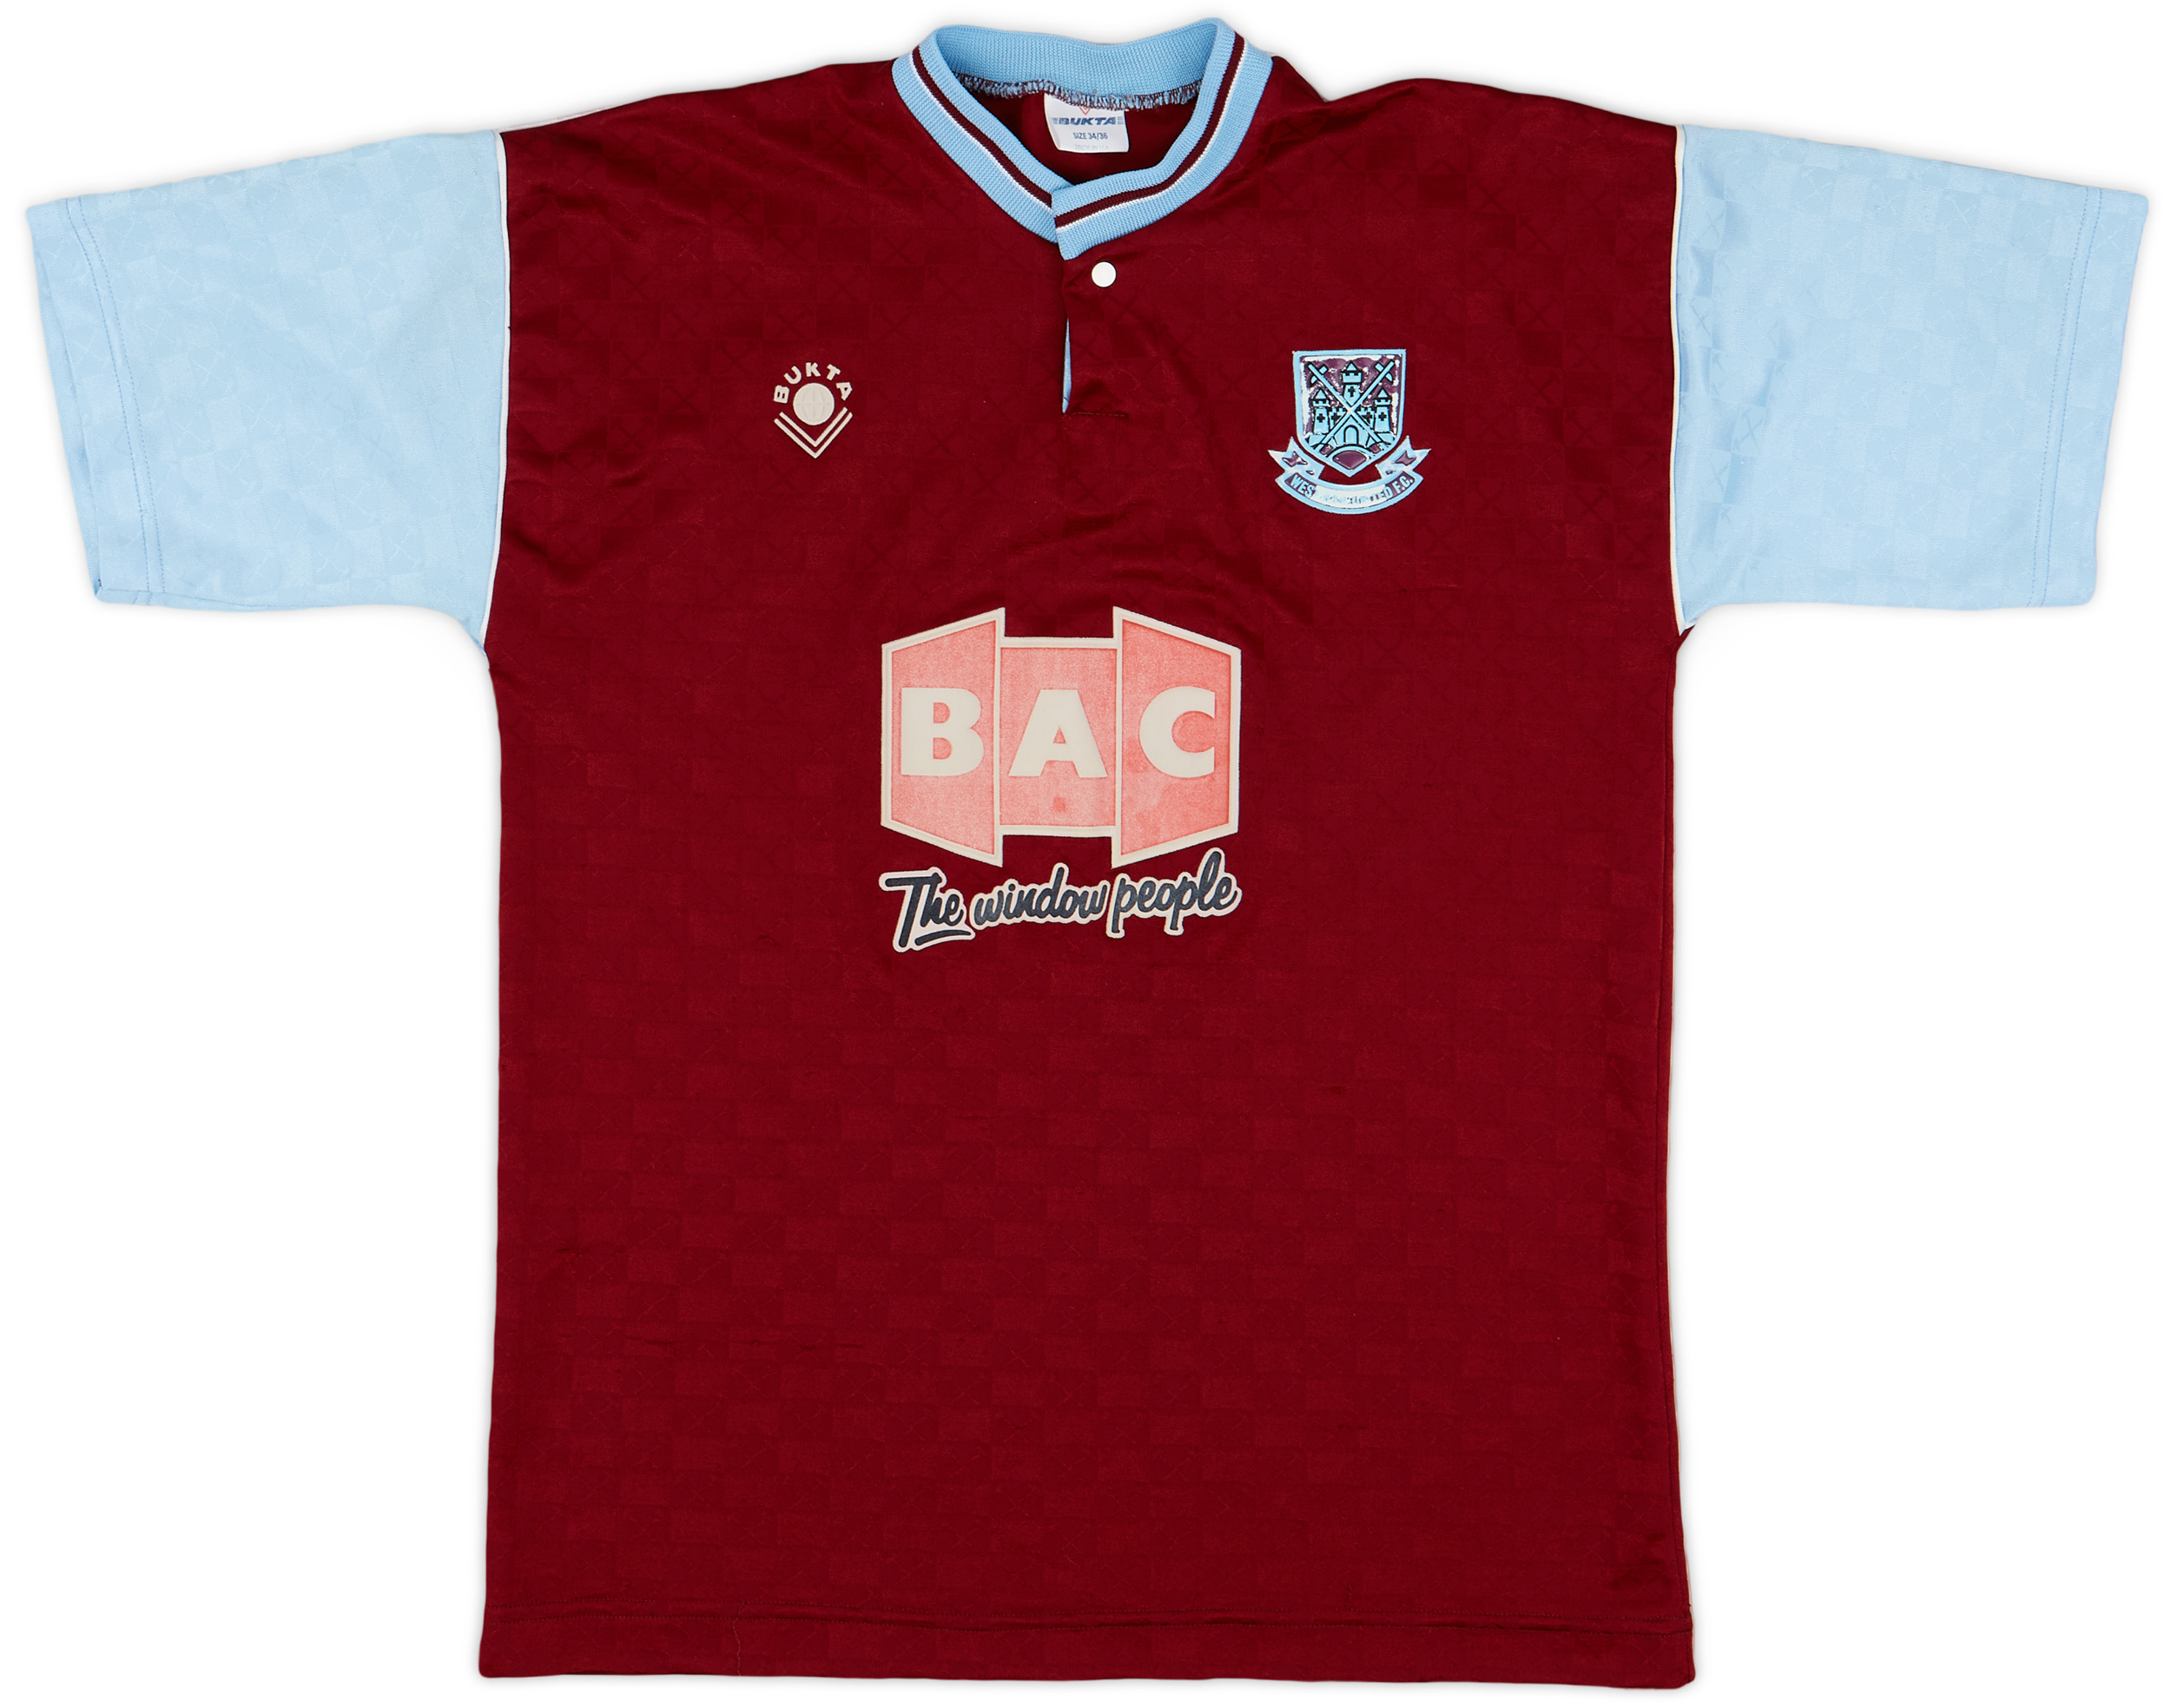 1989-90 West Ham United Home Shirt - 6/10 - ()